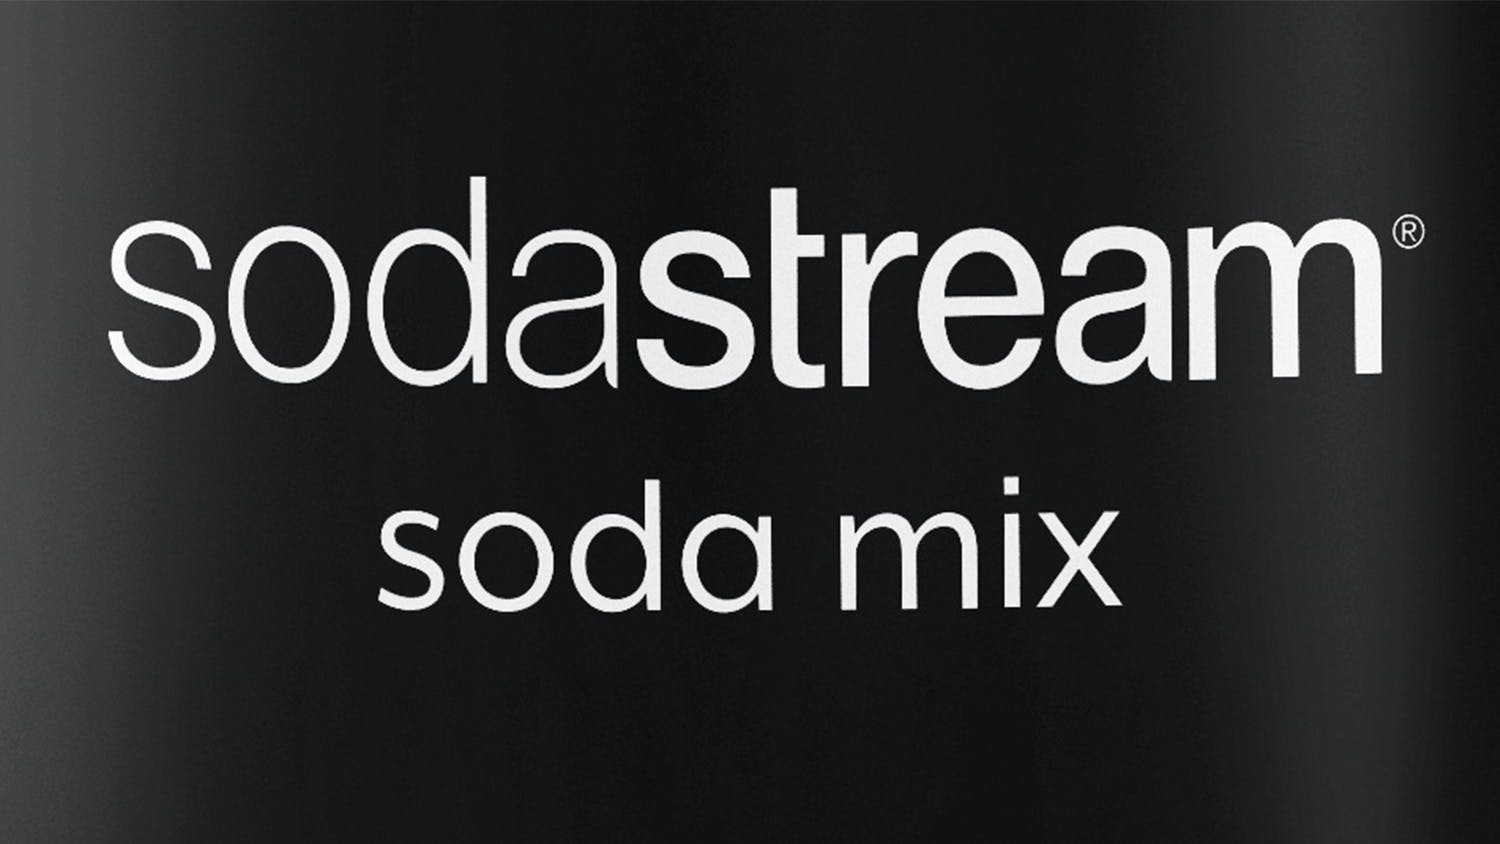 Sodastream Pepsi Max Vanilla Syrup 440ml Black